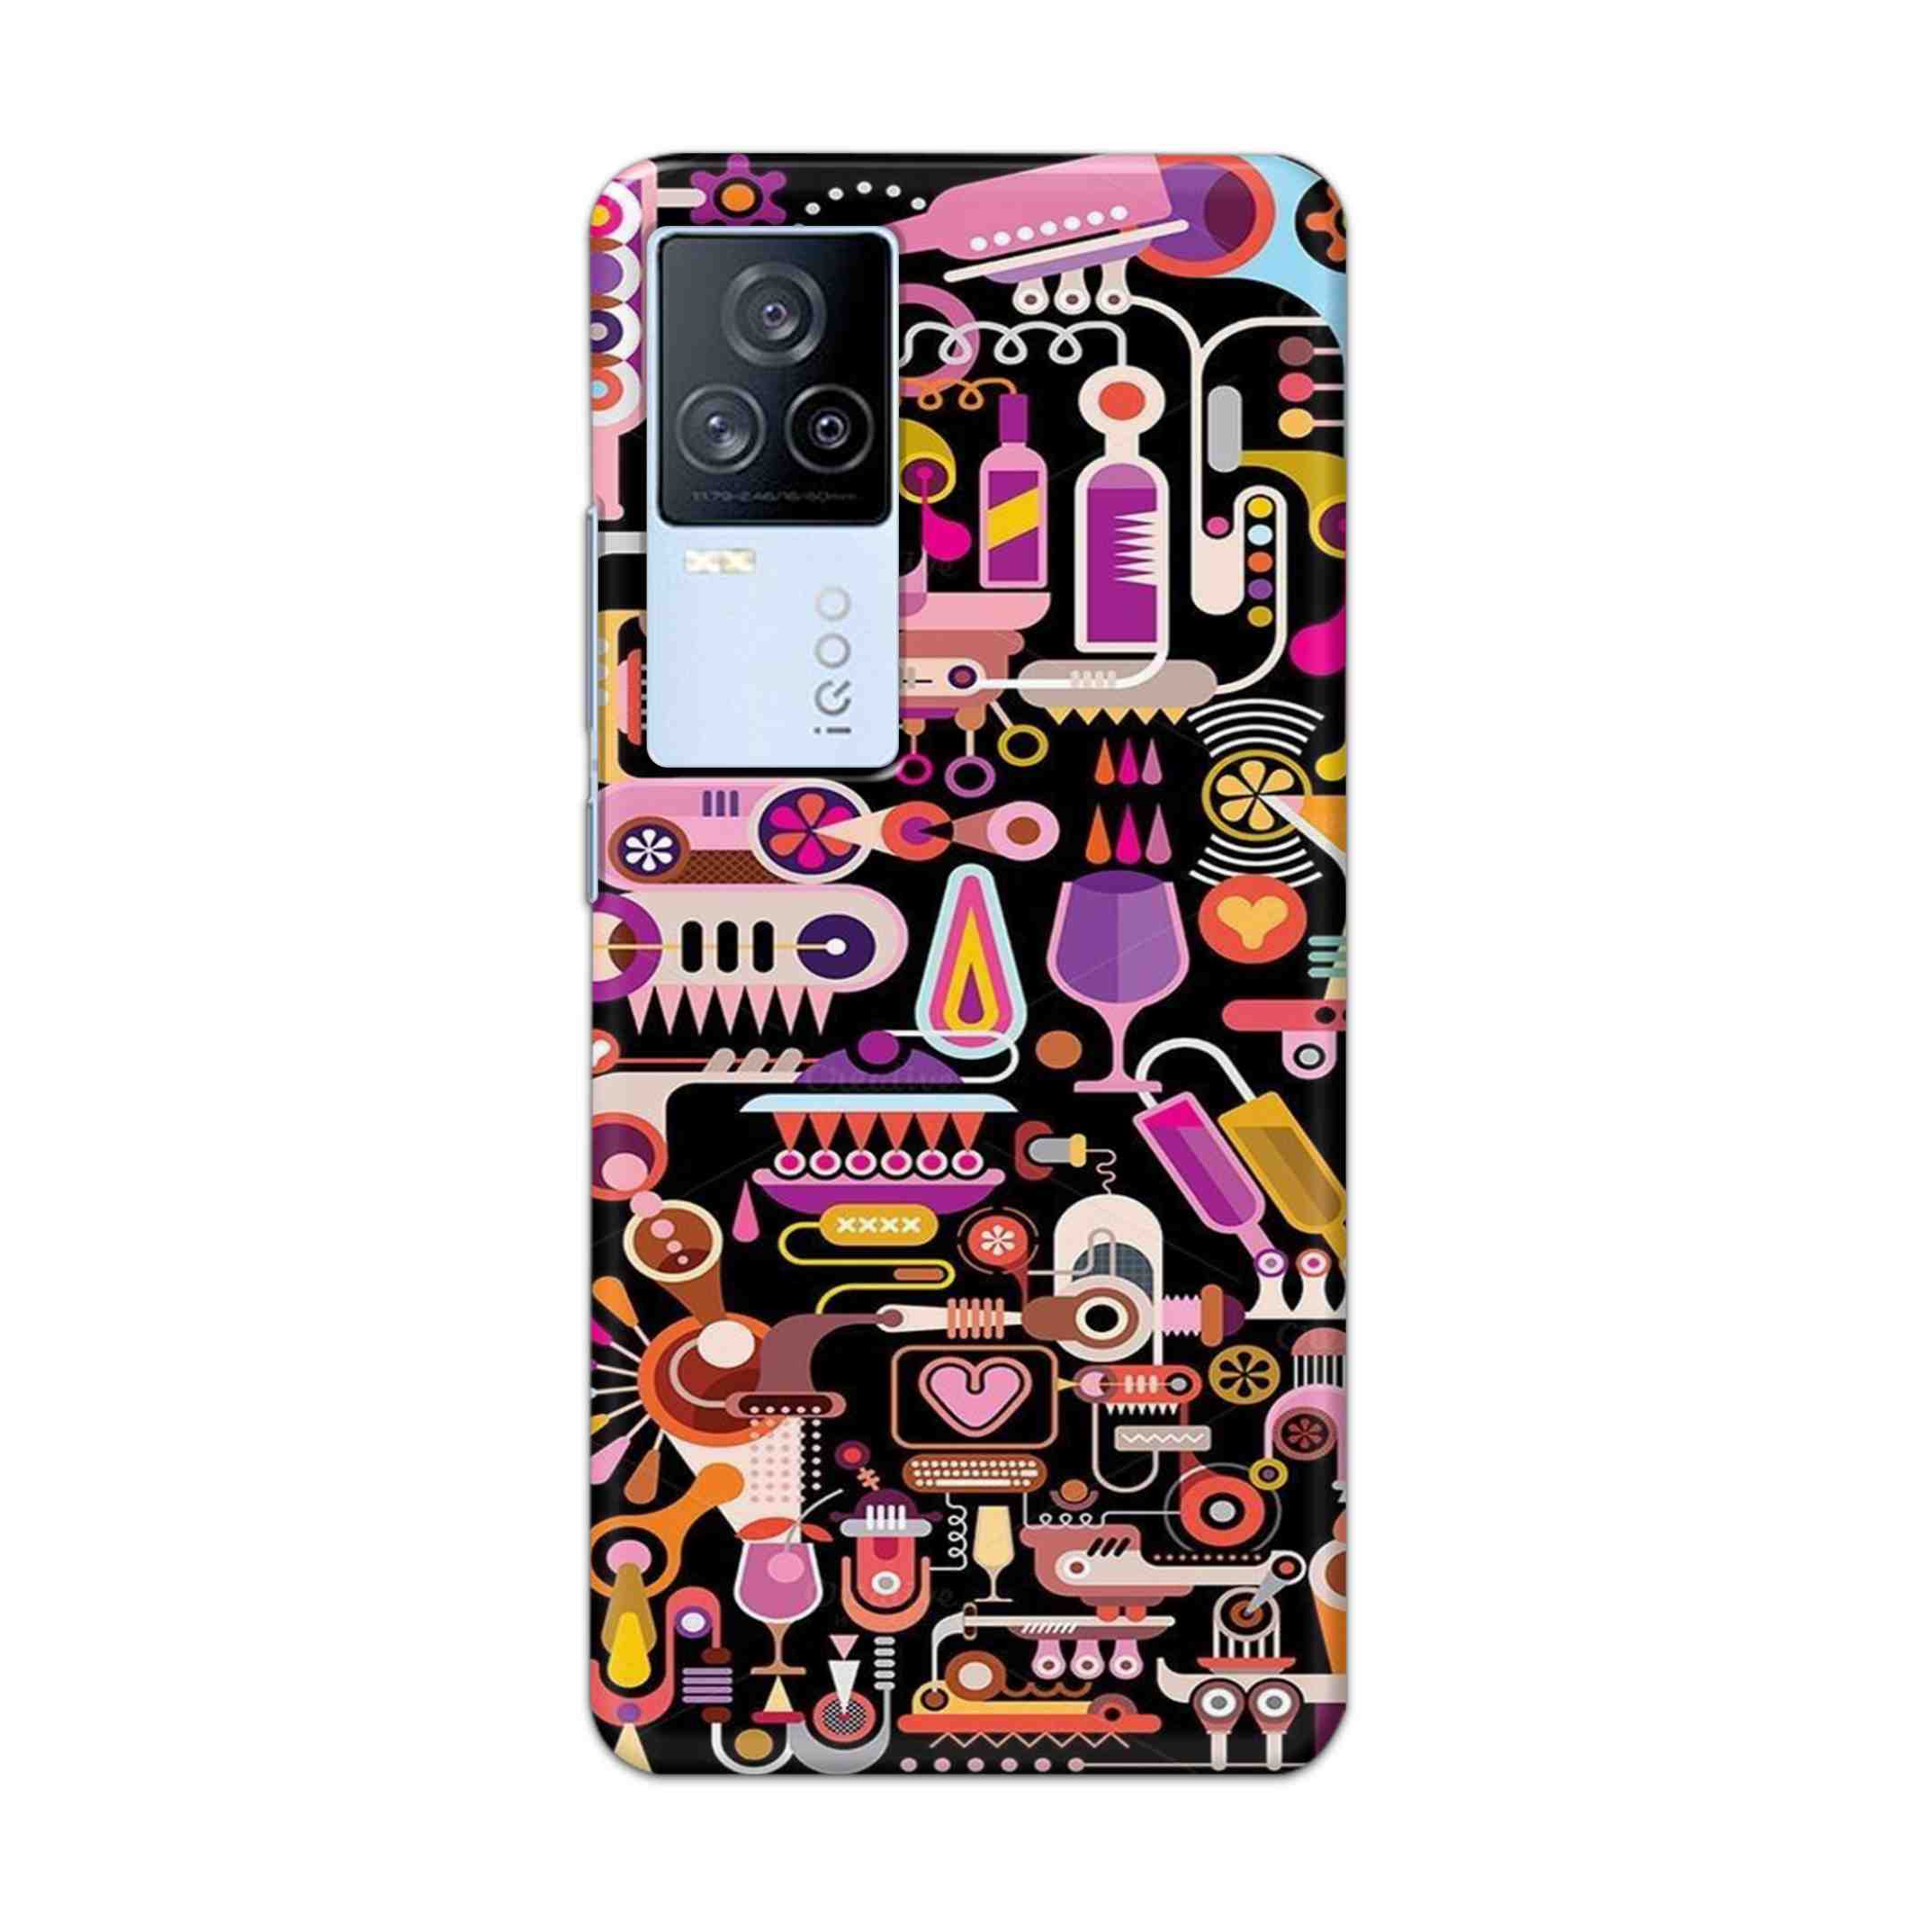 Buy Art Hard Back Mobile Phone Case/Cover For iQOO7 Online